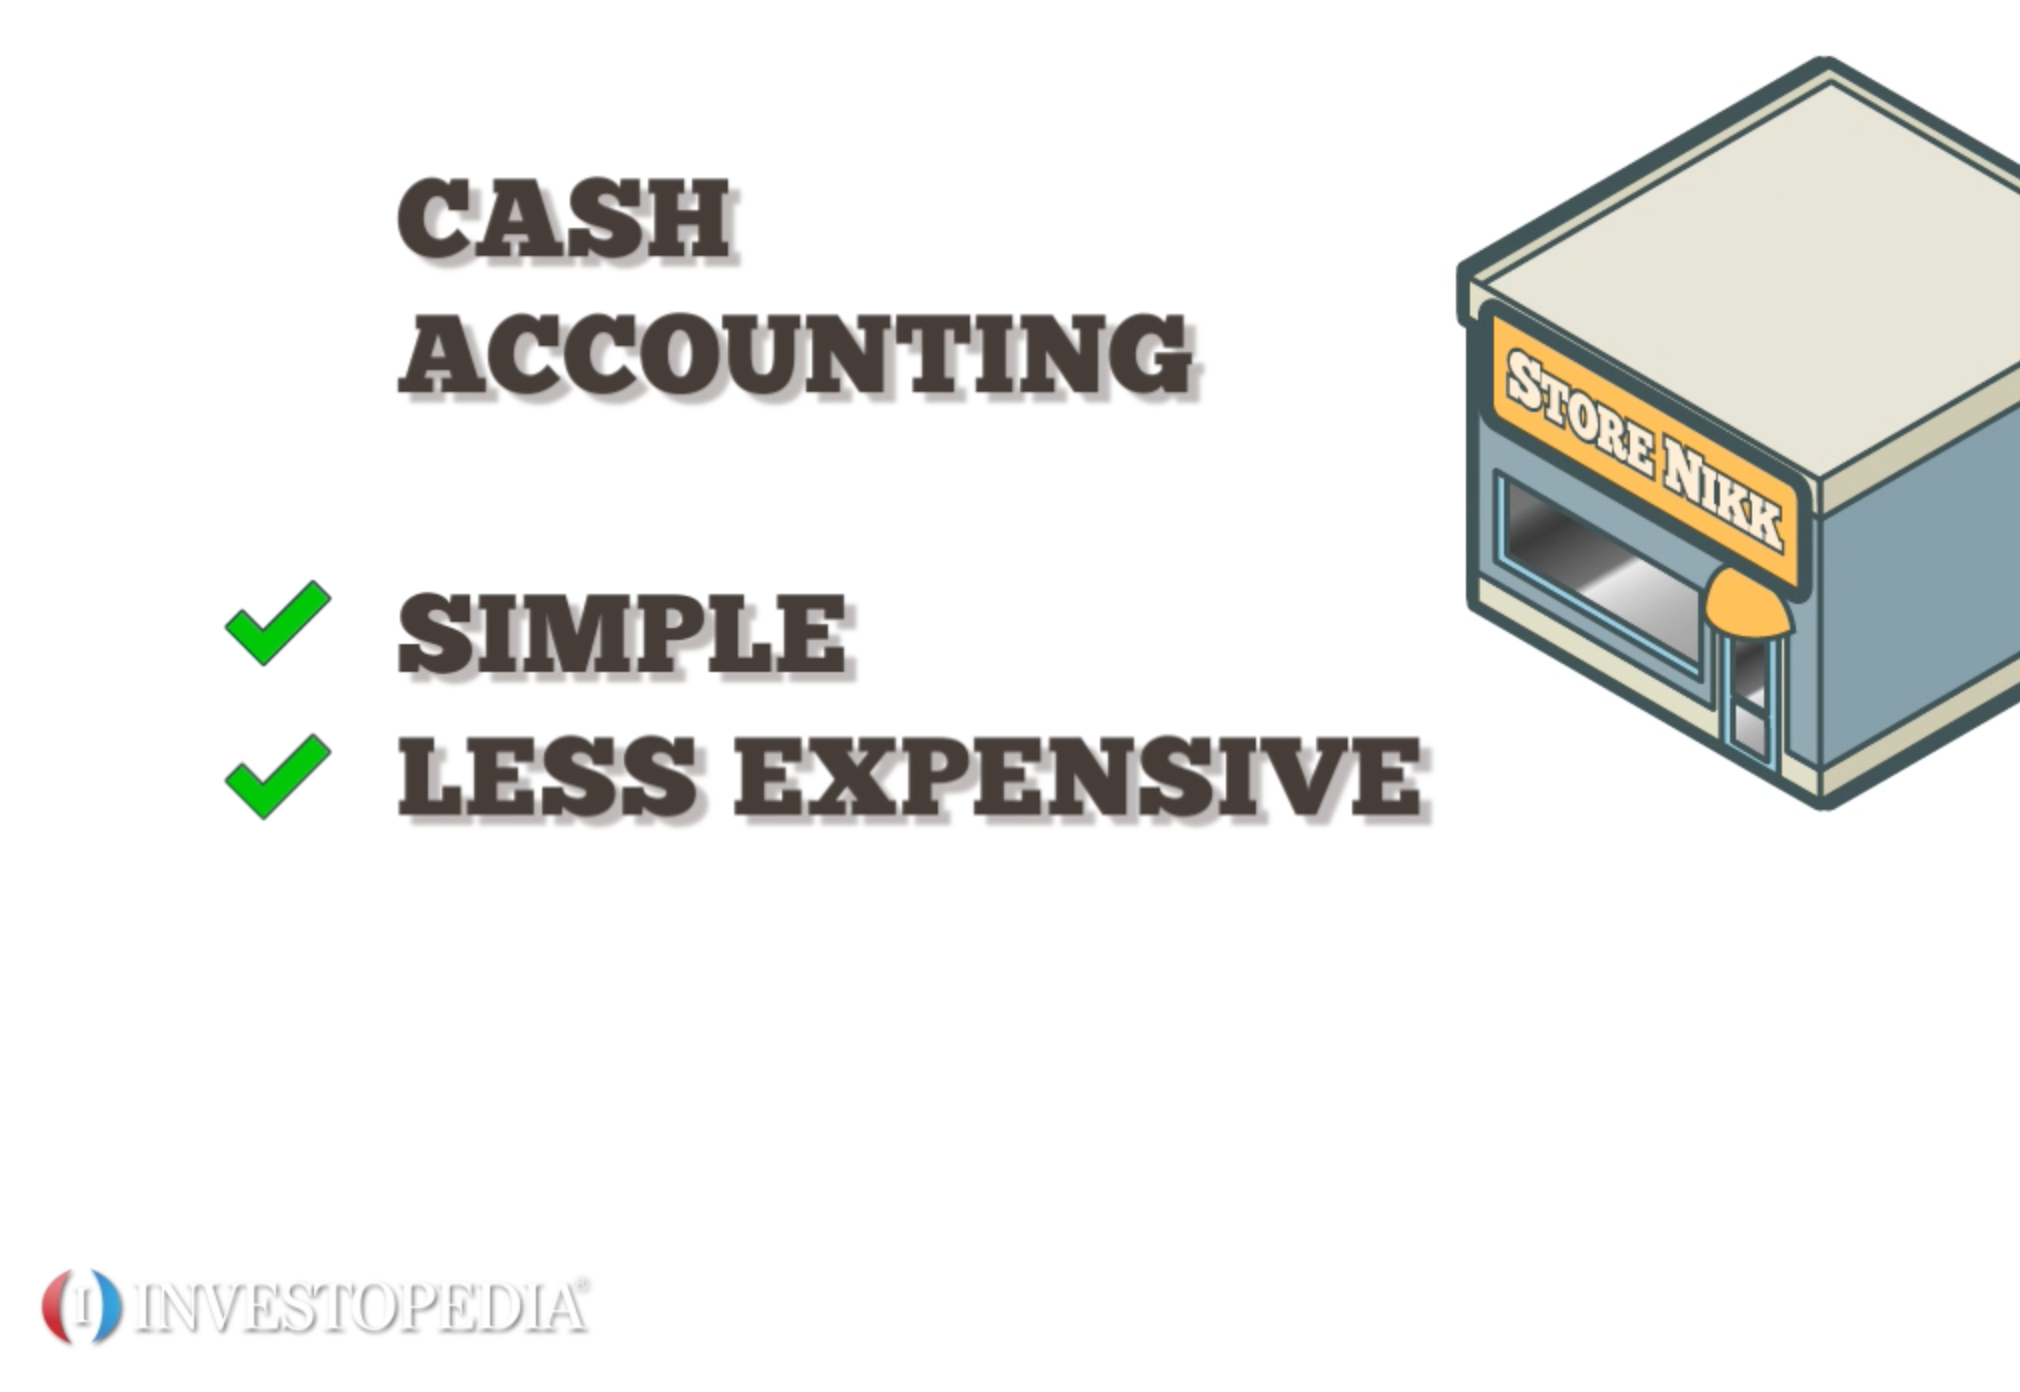 Cash accounting